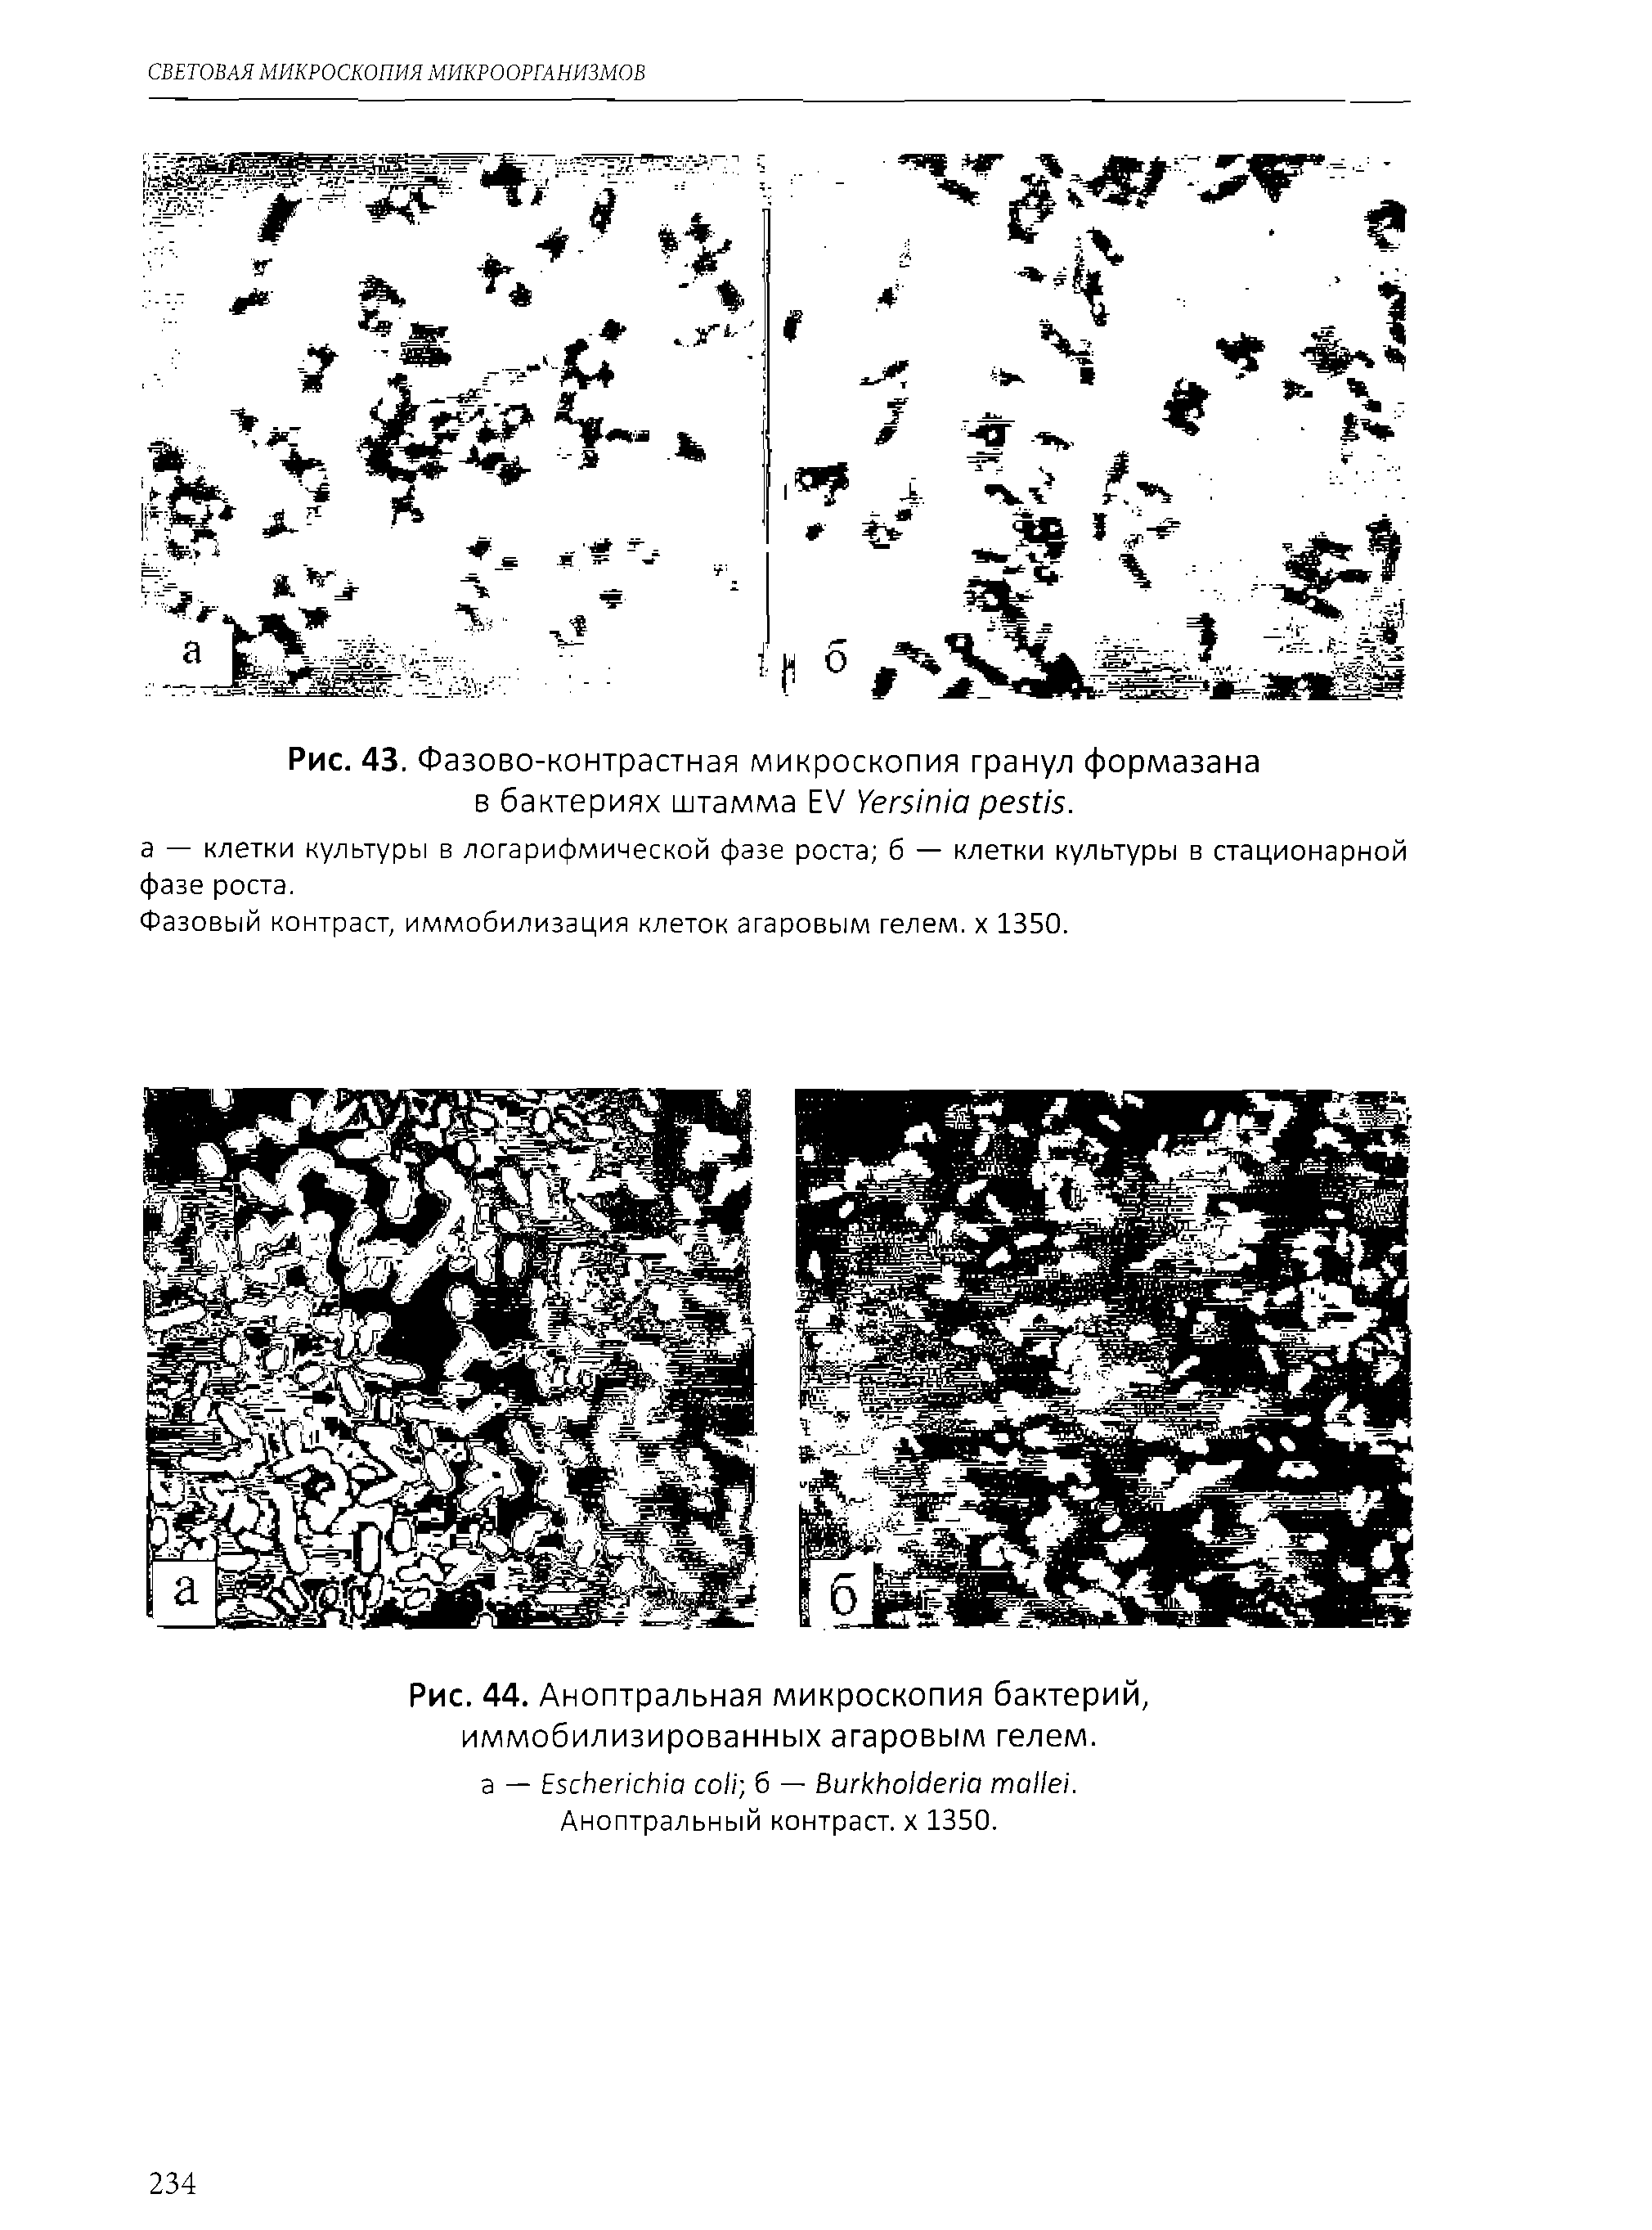 Рис. 44. Аноптральная микроскопия бактерий, иммобилизированных агаровым гелем, а — E б — B . Аноптральный контраст, х 1350.